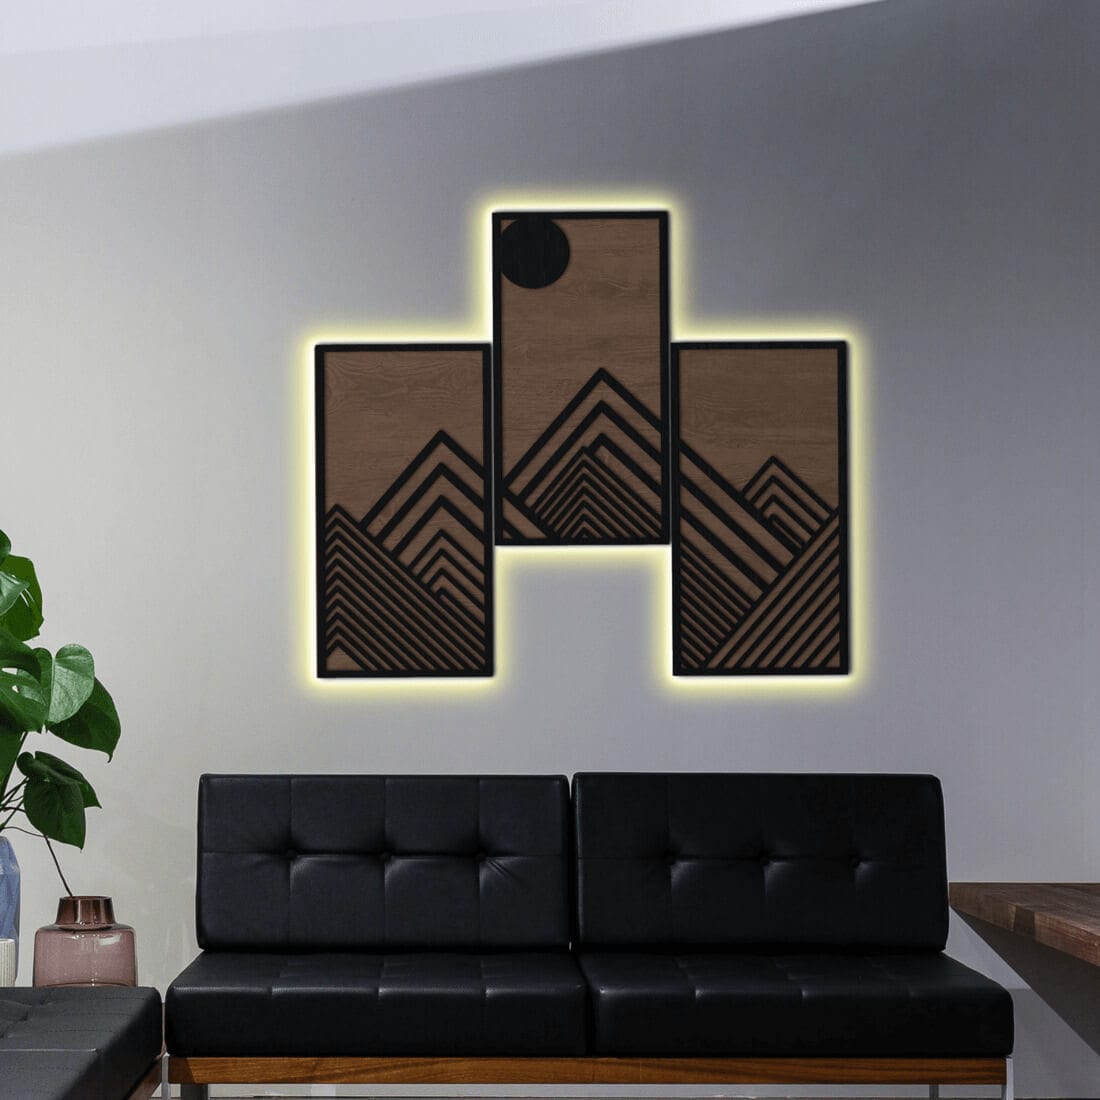 LED Wall Art Decor - Mountain massif triptych